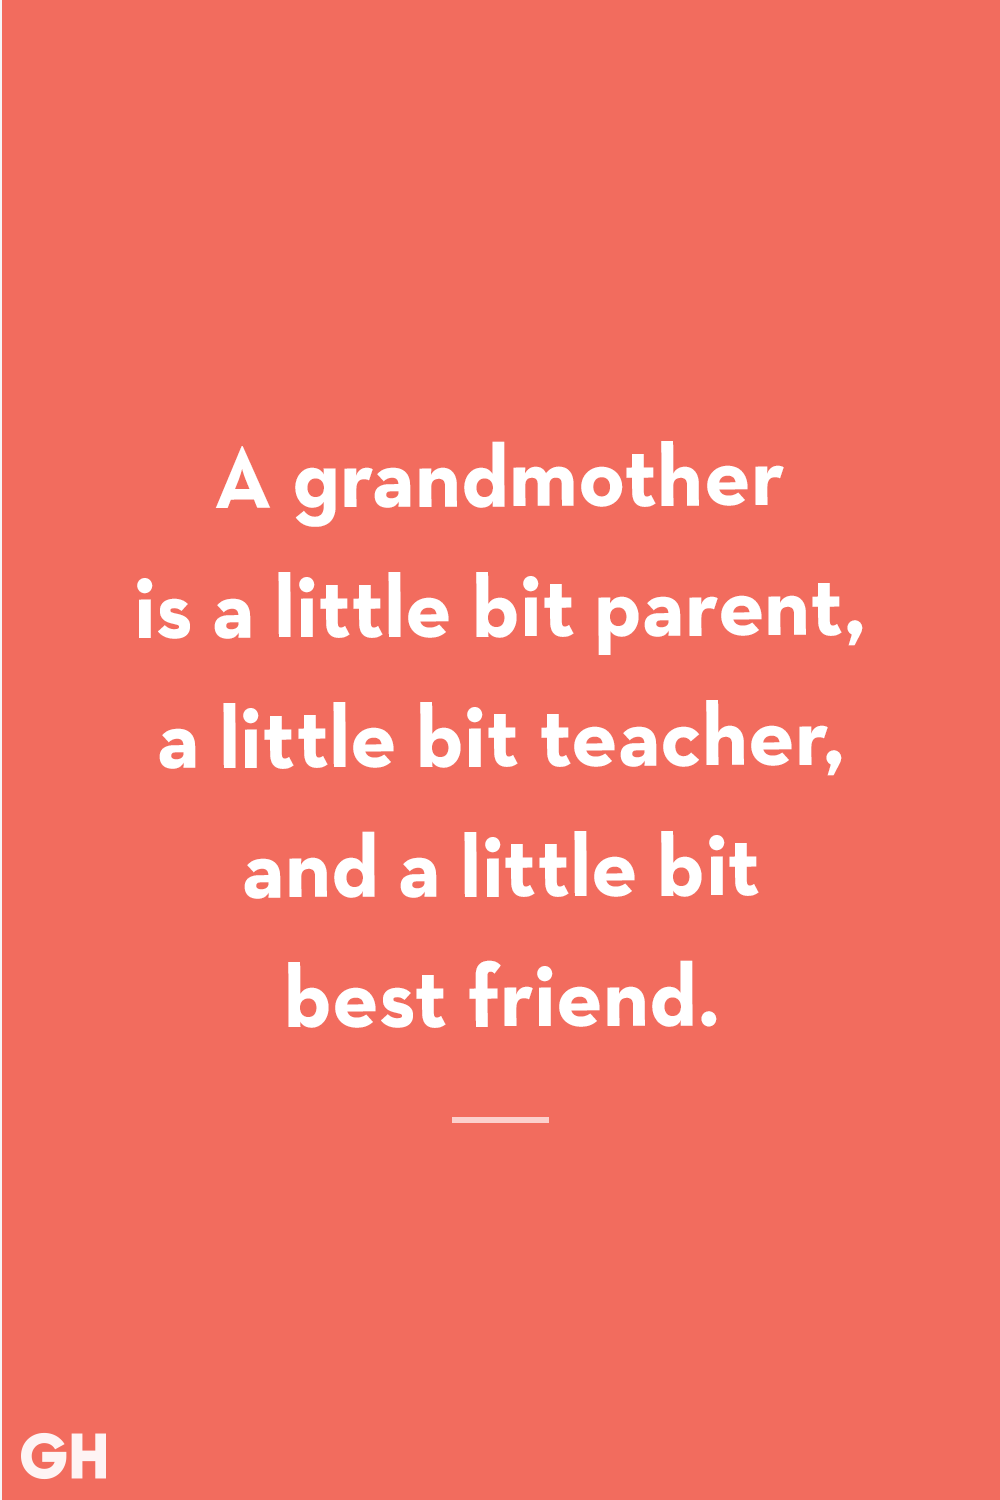 great grandma quotes